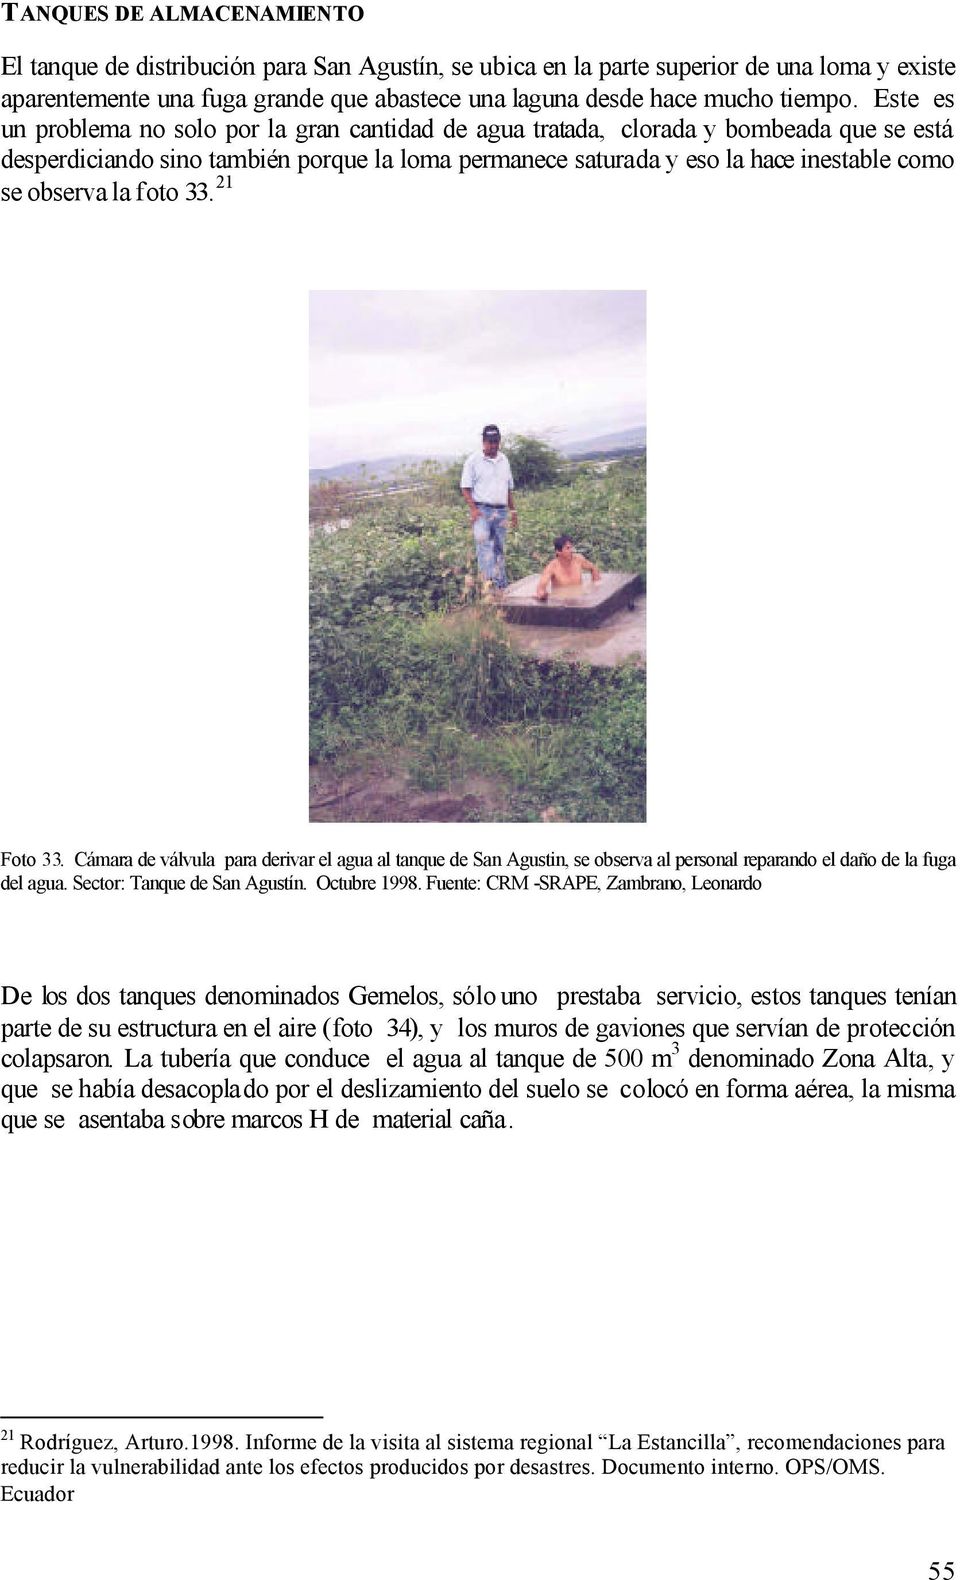 la foto 33. 21 Foto 33. Cámara de válvula para derivar el agua al tanque de San Agustin, se observa al personal reparando el daño de la fuga del agua. Sector: Tanque de San Agustín. Octubre 1998.